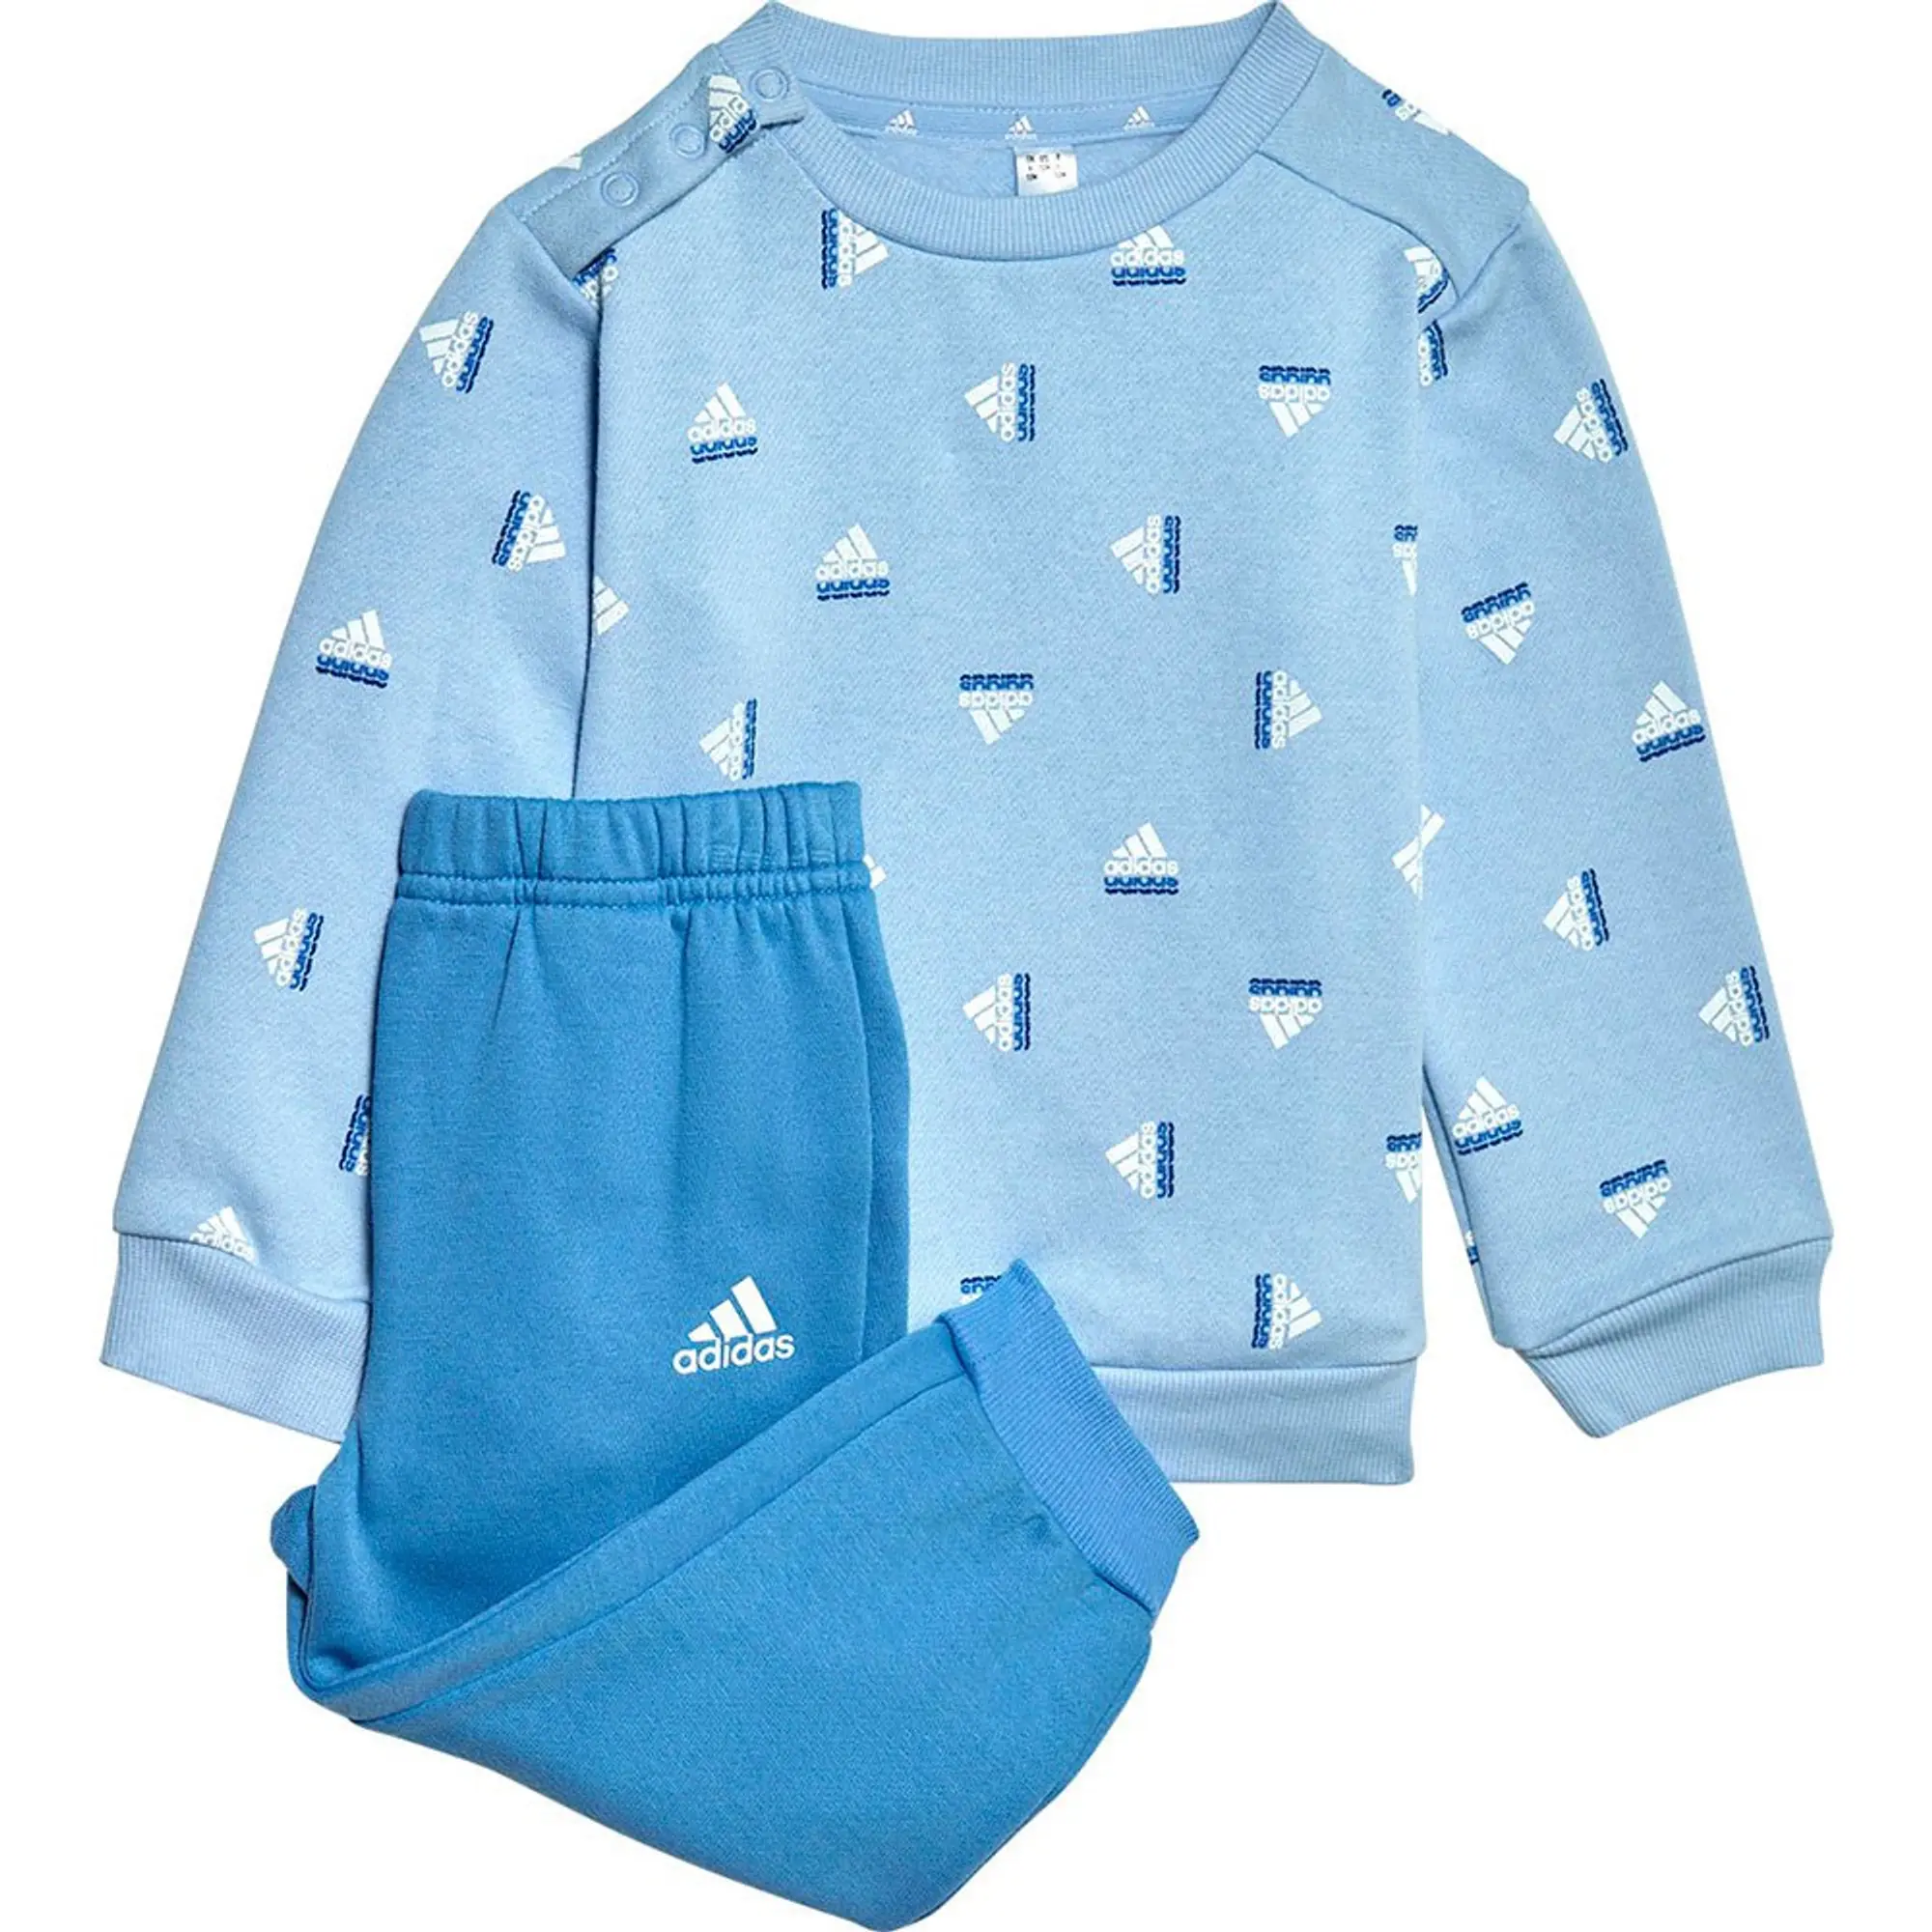 adidas Sportswear Infant Brand Love Crew & Jogger Set - Blue, Blue